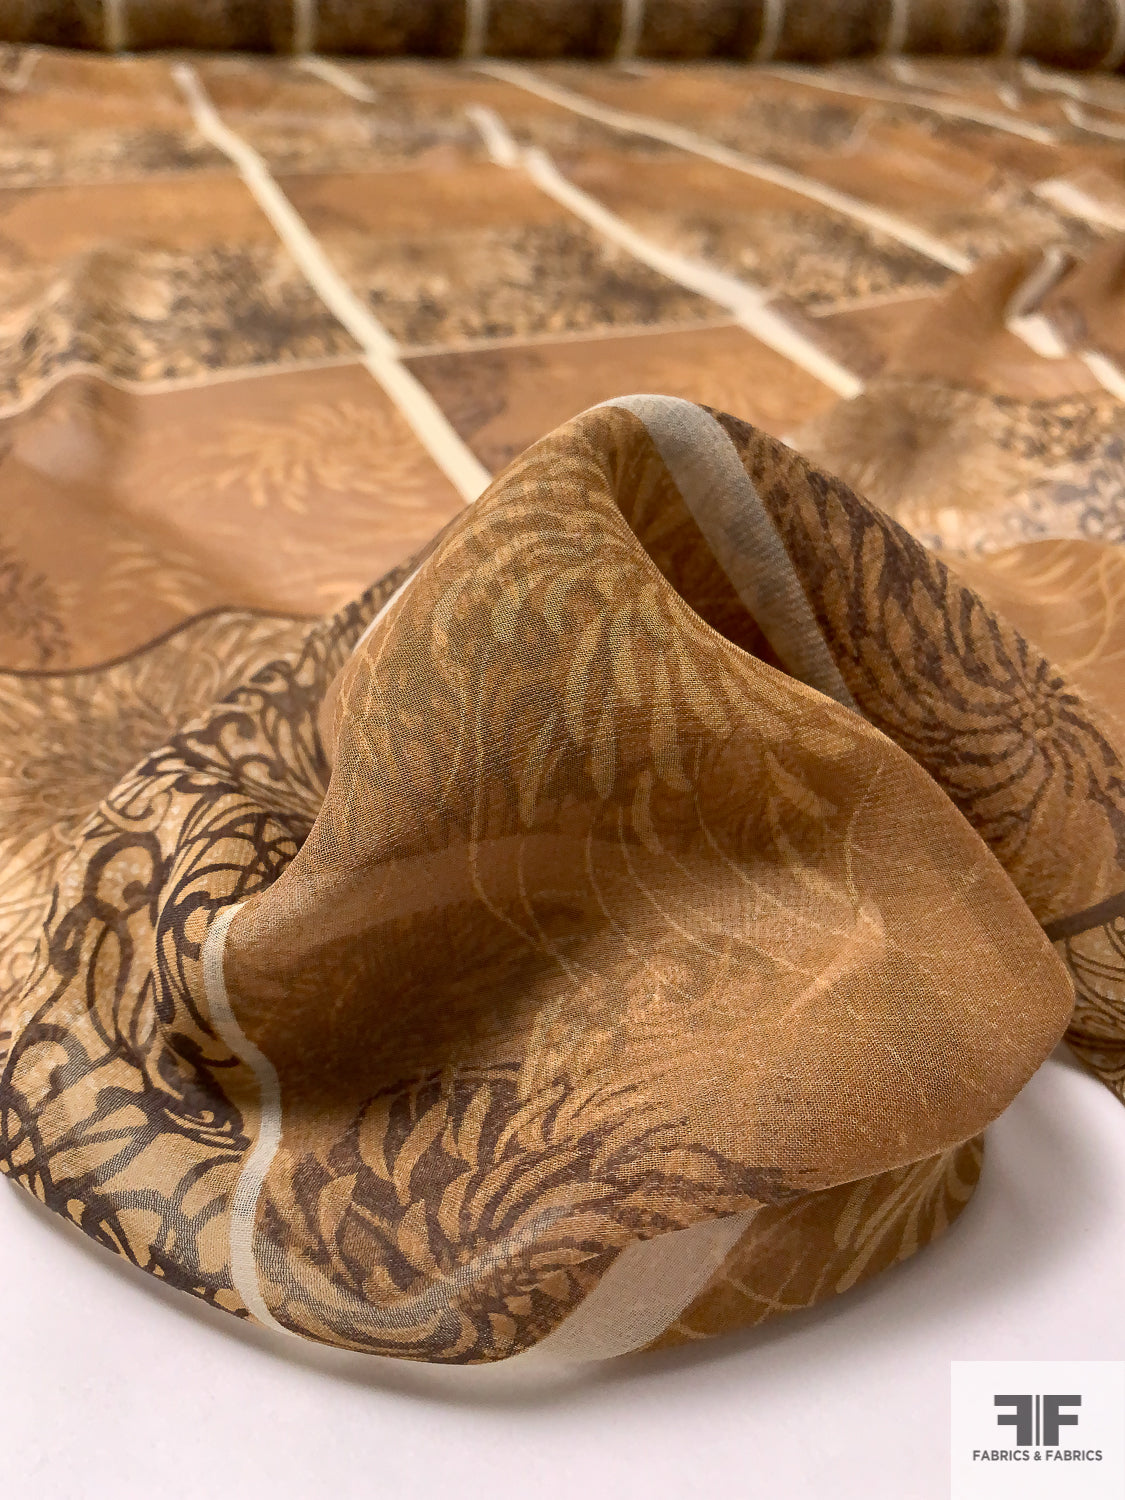 Tentacle and Floral Grid Printed Silk Chiffon - Caramel / Brown / Tan / Cream